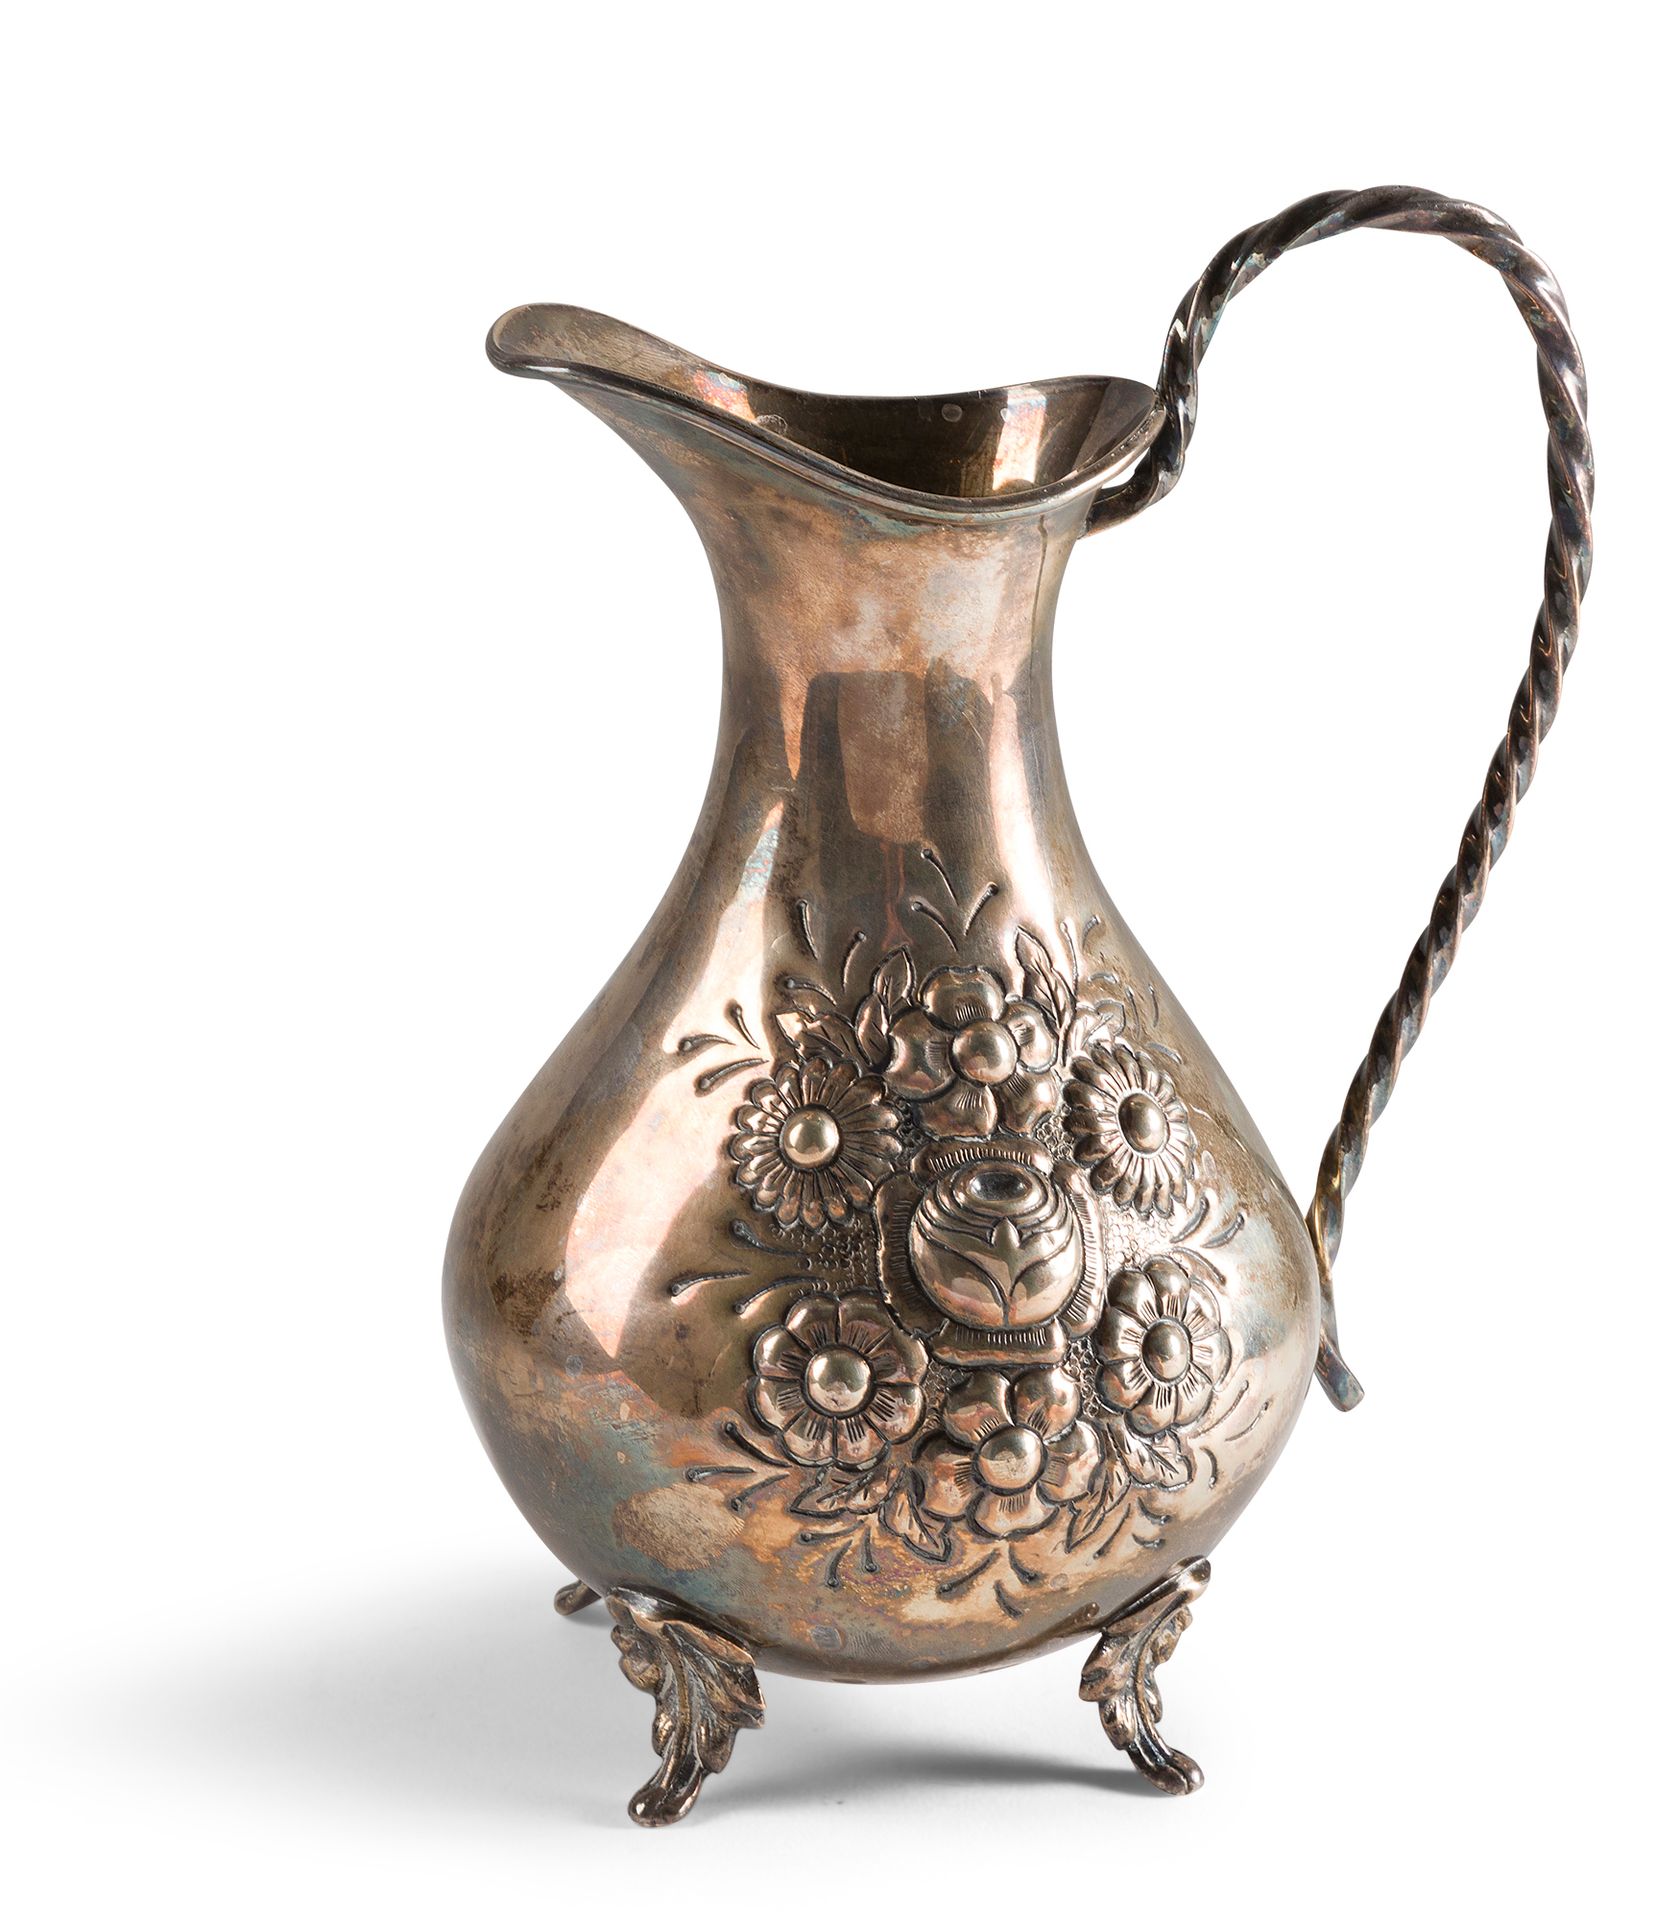 Null 银壶（900年），壶身压印着花束，壶把扭曲，它站在四脚之上。

HABIS之家，黎巴嫩的工作

H.23厘米

重量562克